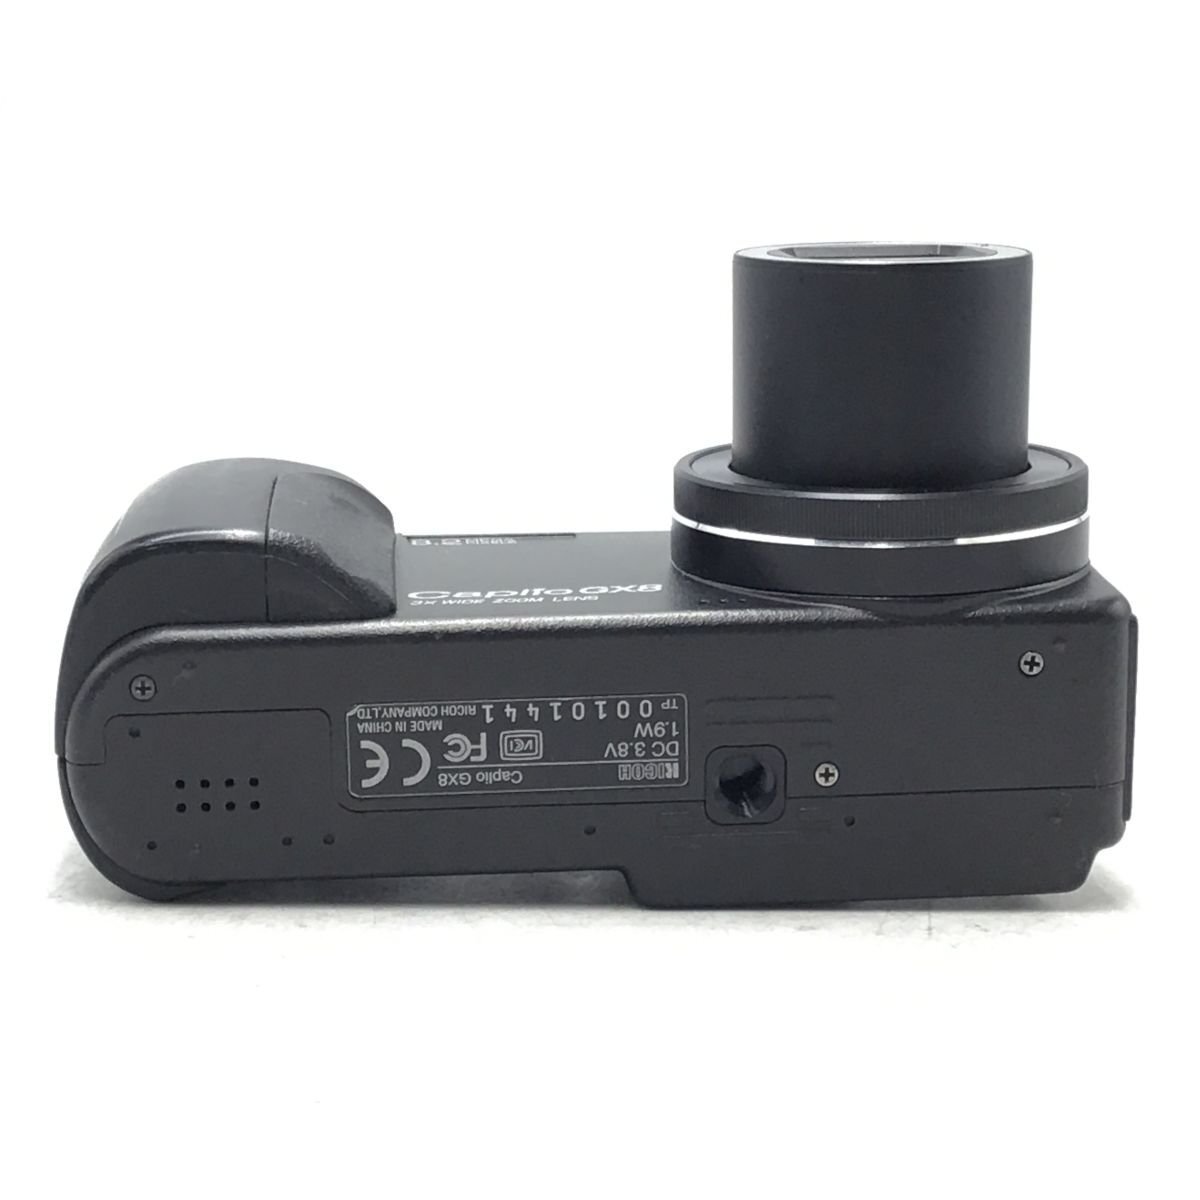  камера Ricoh Caplio GX8 compact цифровой корпус текущее состояние товар [8231KC]